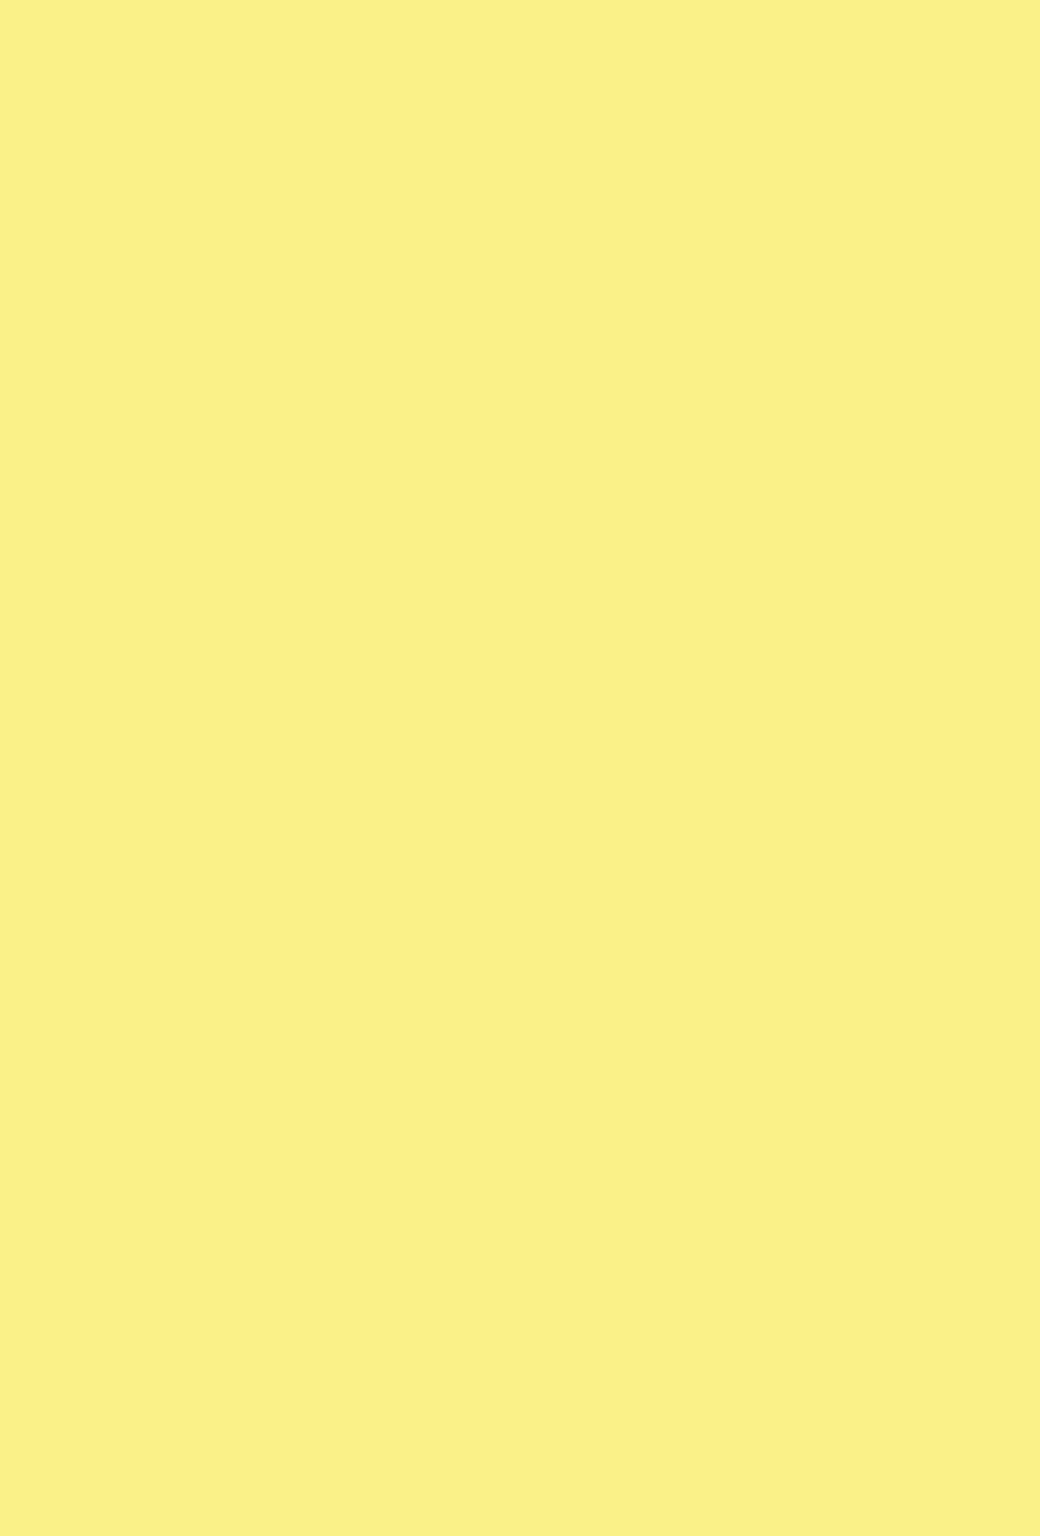 50 Iphone 5c Yellow Wallpaper On Wallpapersafari